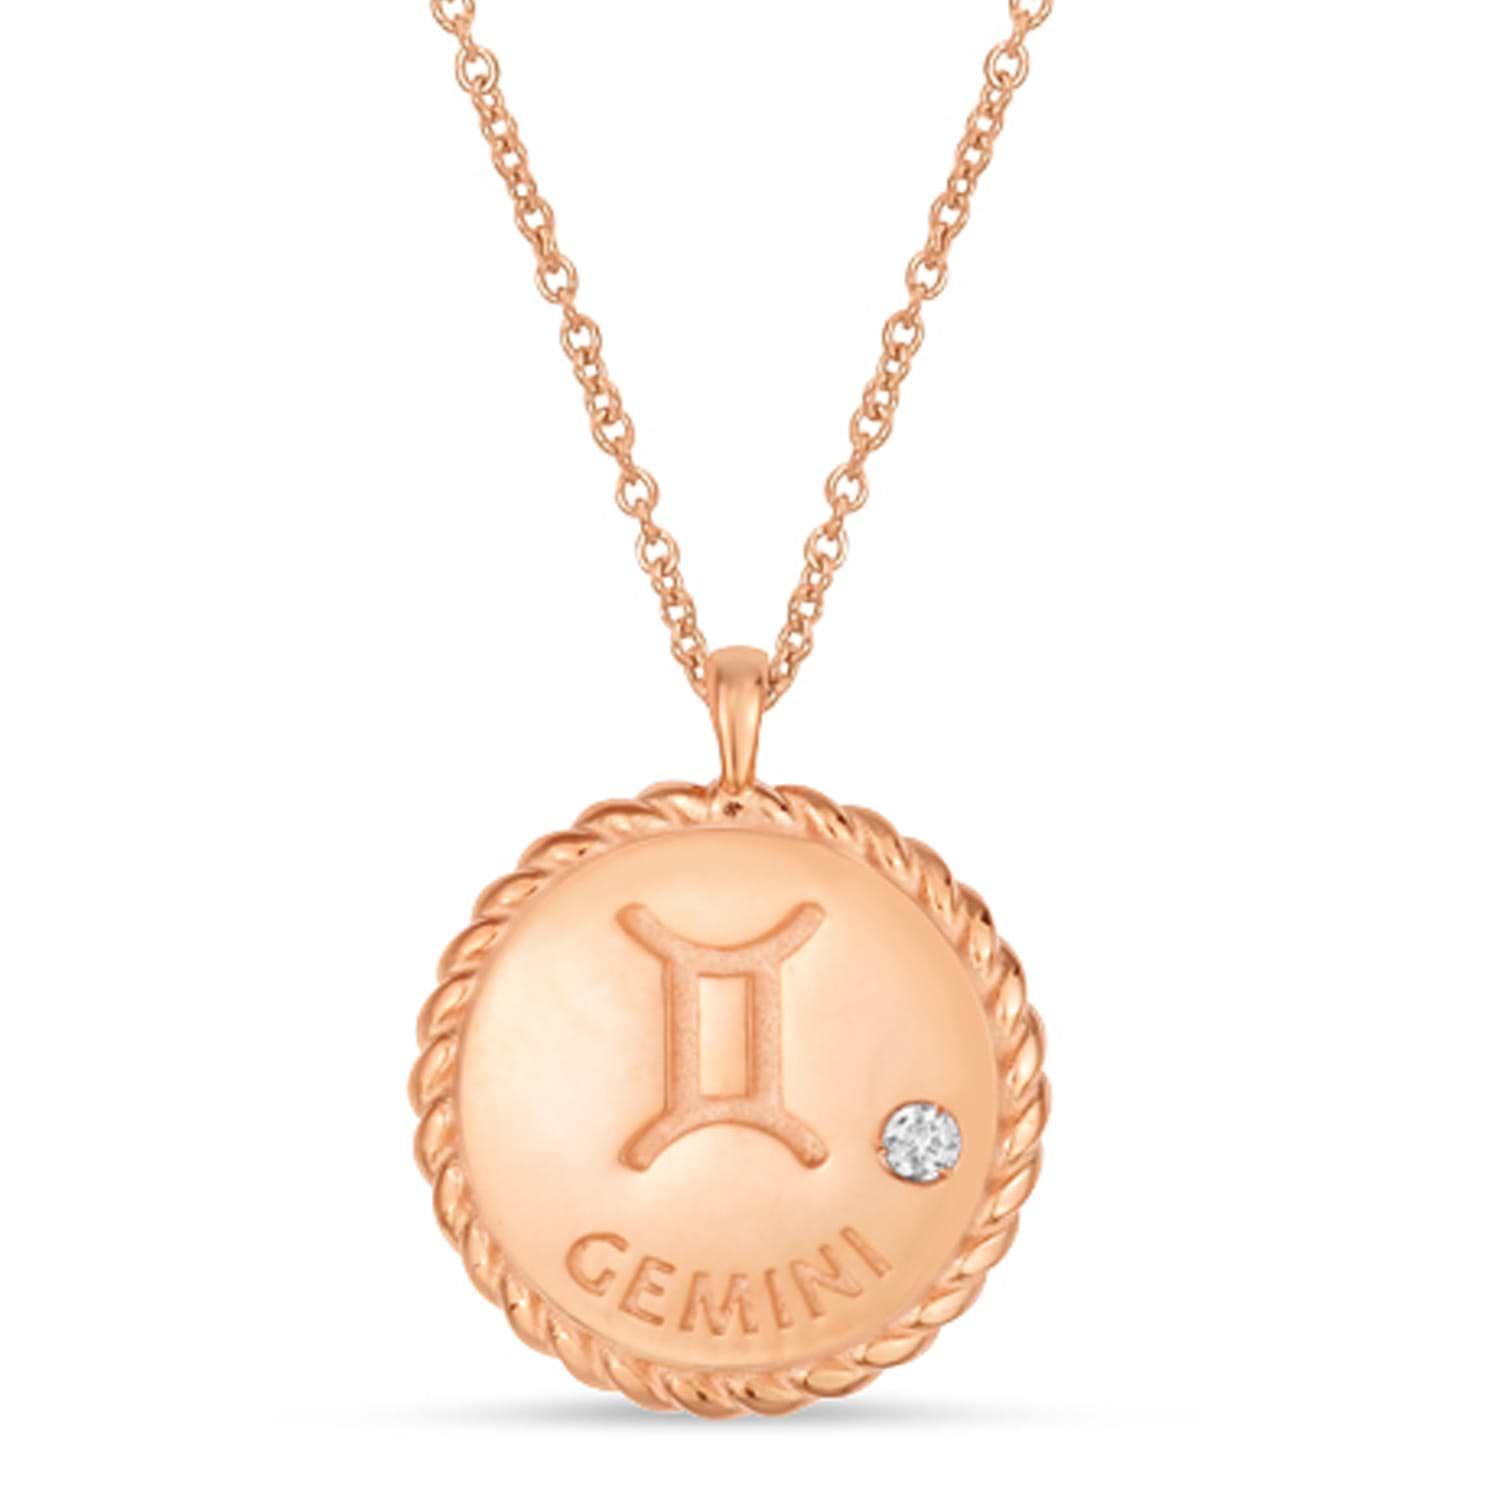 Gemini Zodiac Diamond Medallion Disk Pendant Necklace 14k Rose Gold